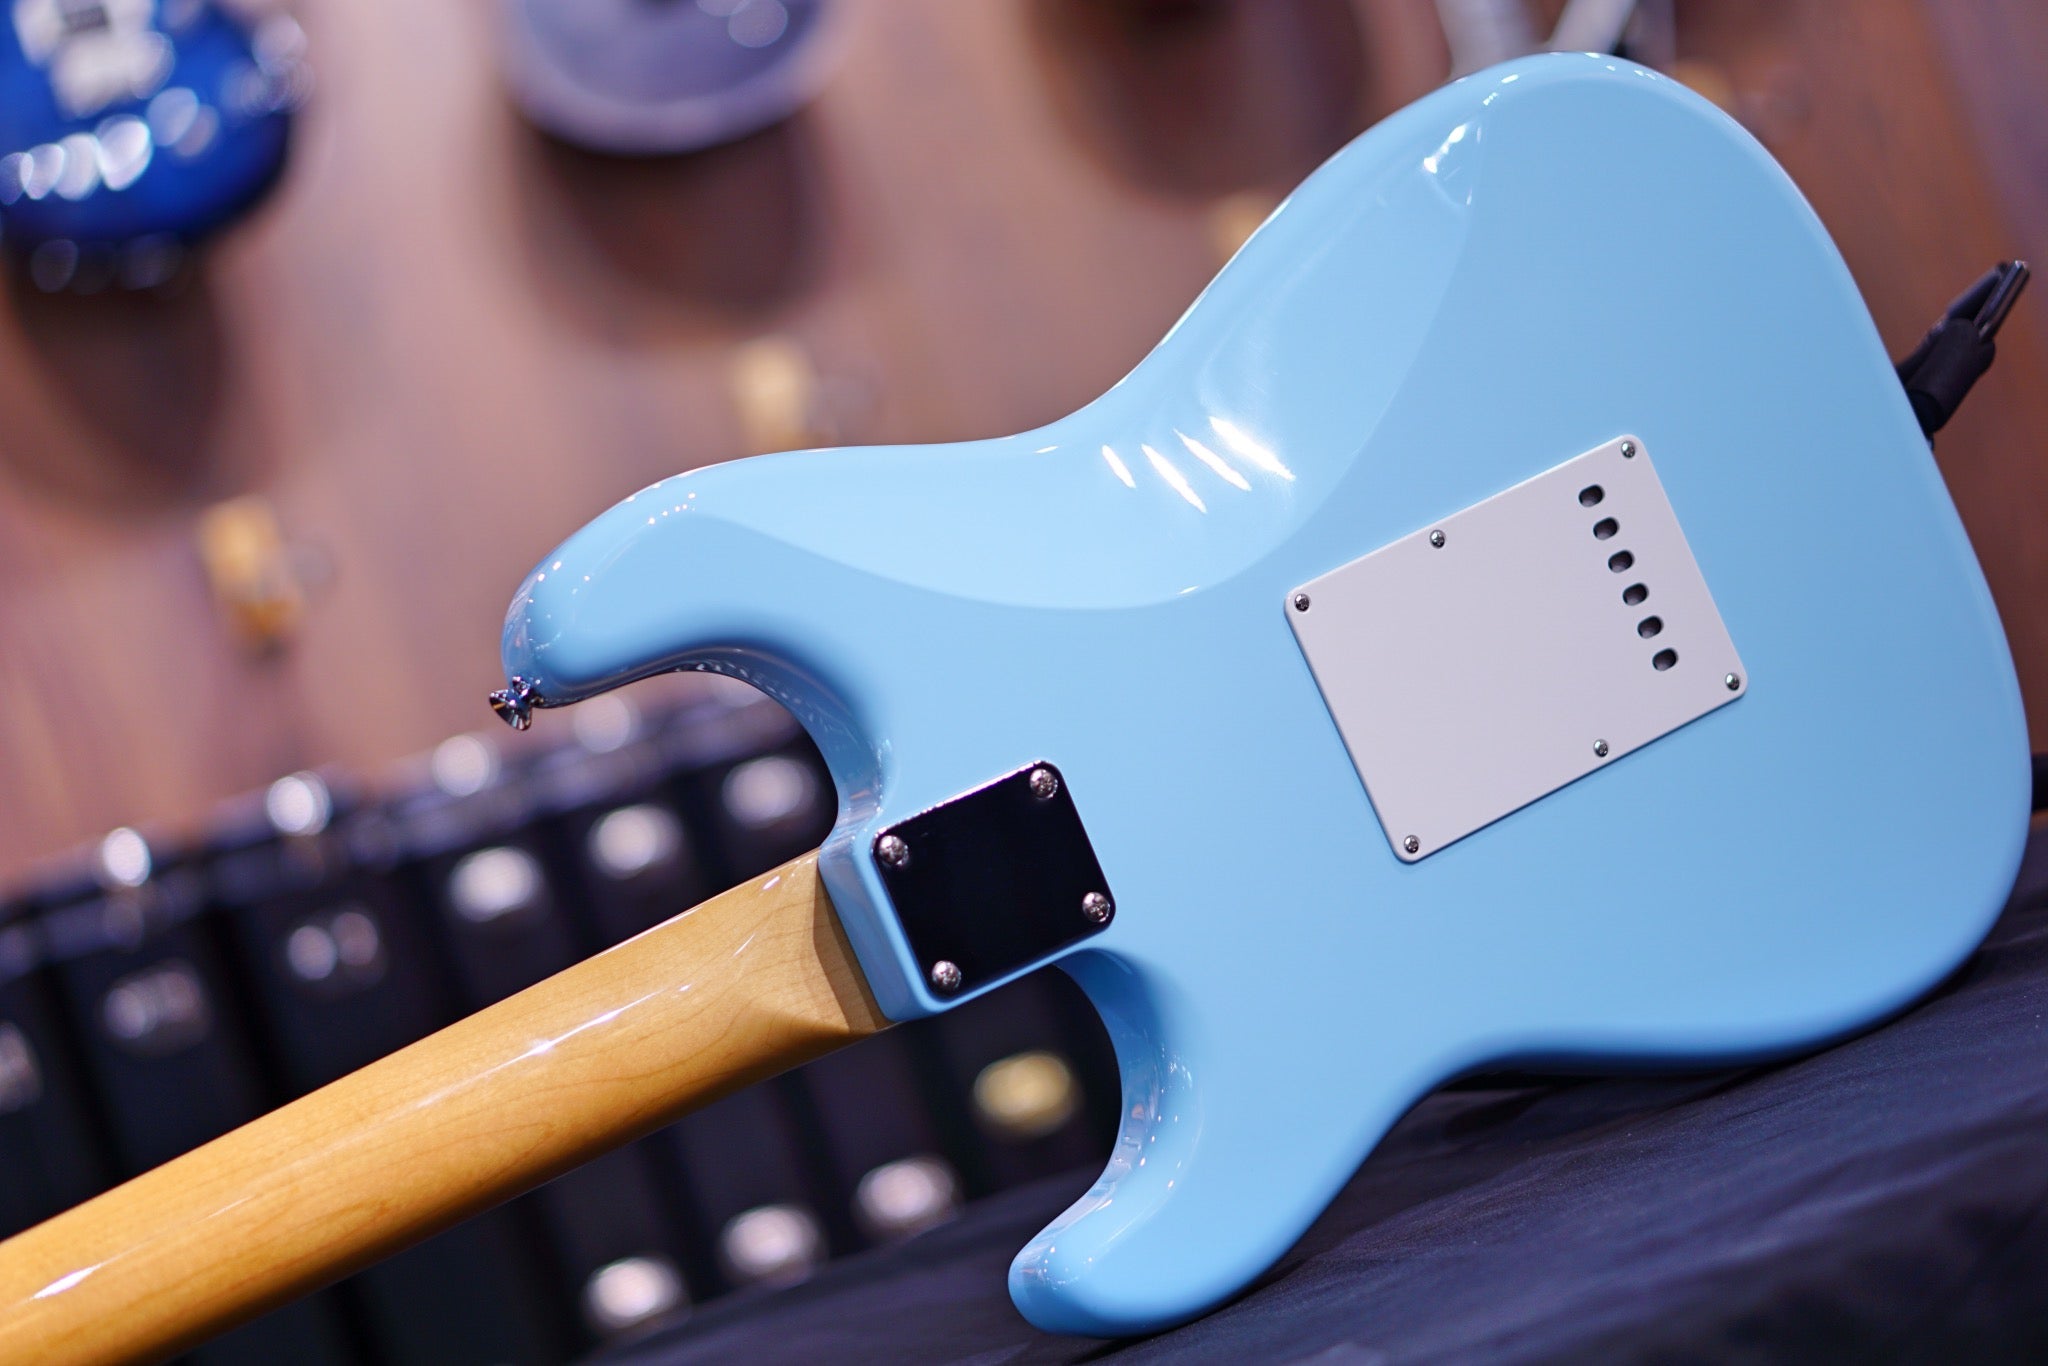 ESP Edwards E-ST-125ALPF Sonic blue ED2151378P - HIENDGUITAR   EDWARDS guitar